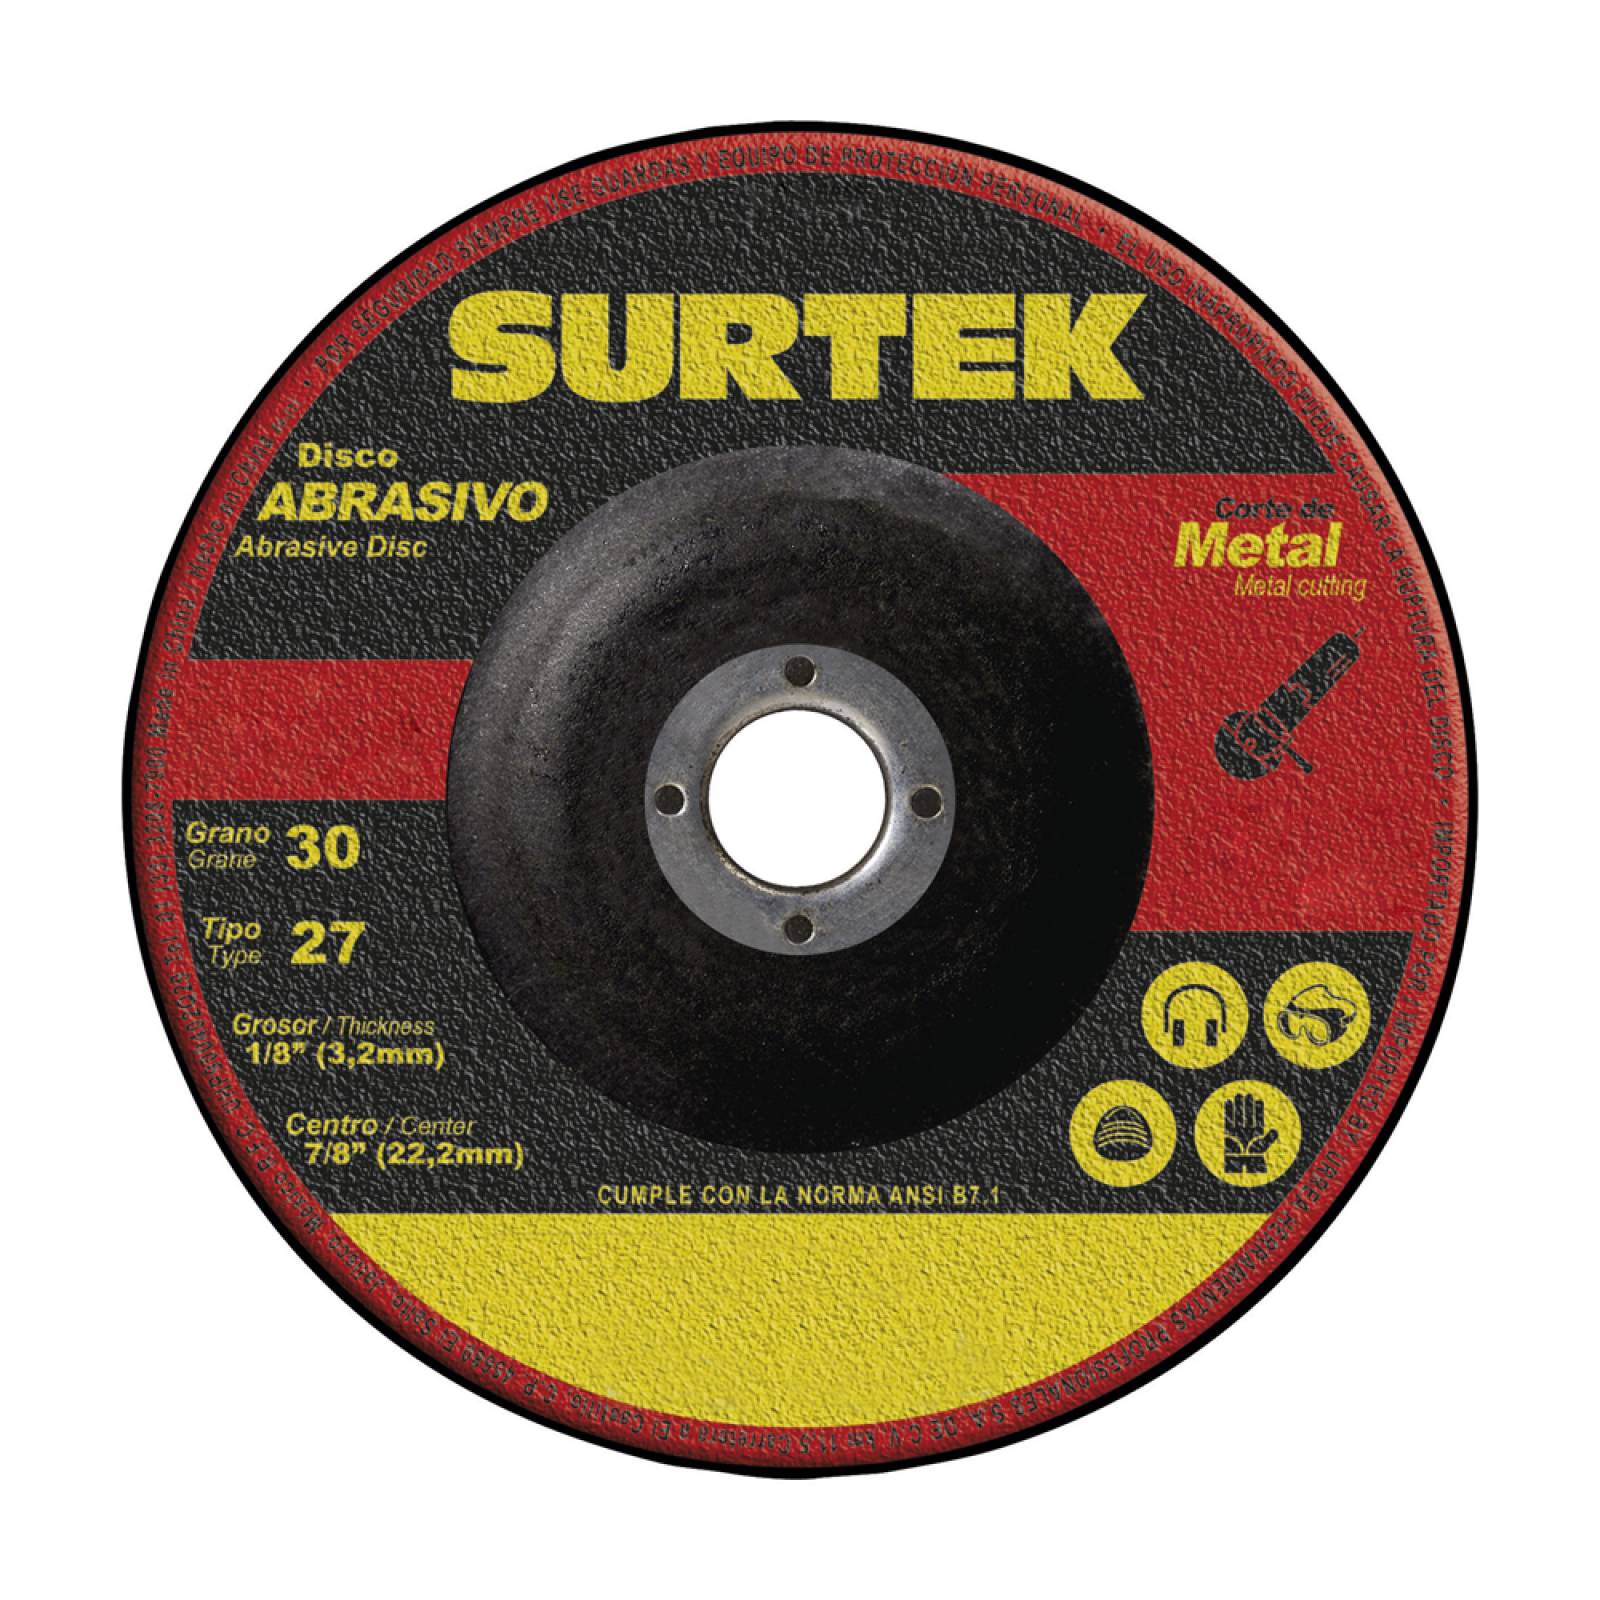 Disco T/27 Metal 9x1/8 Pulgadas 123327 Surtek 